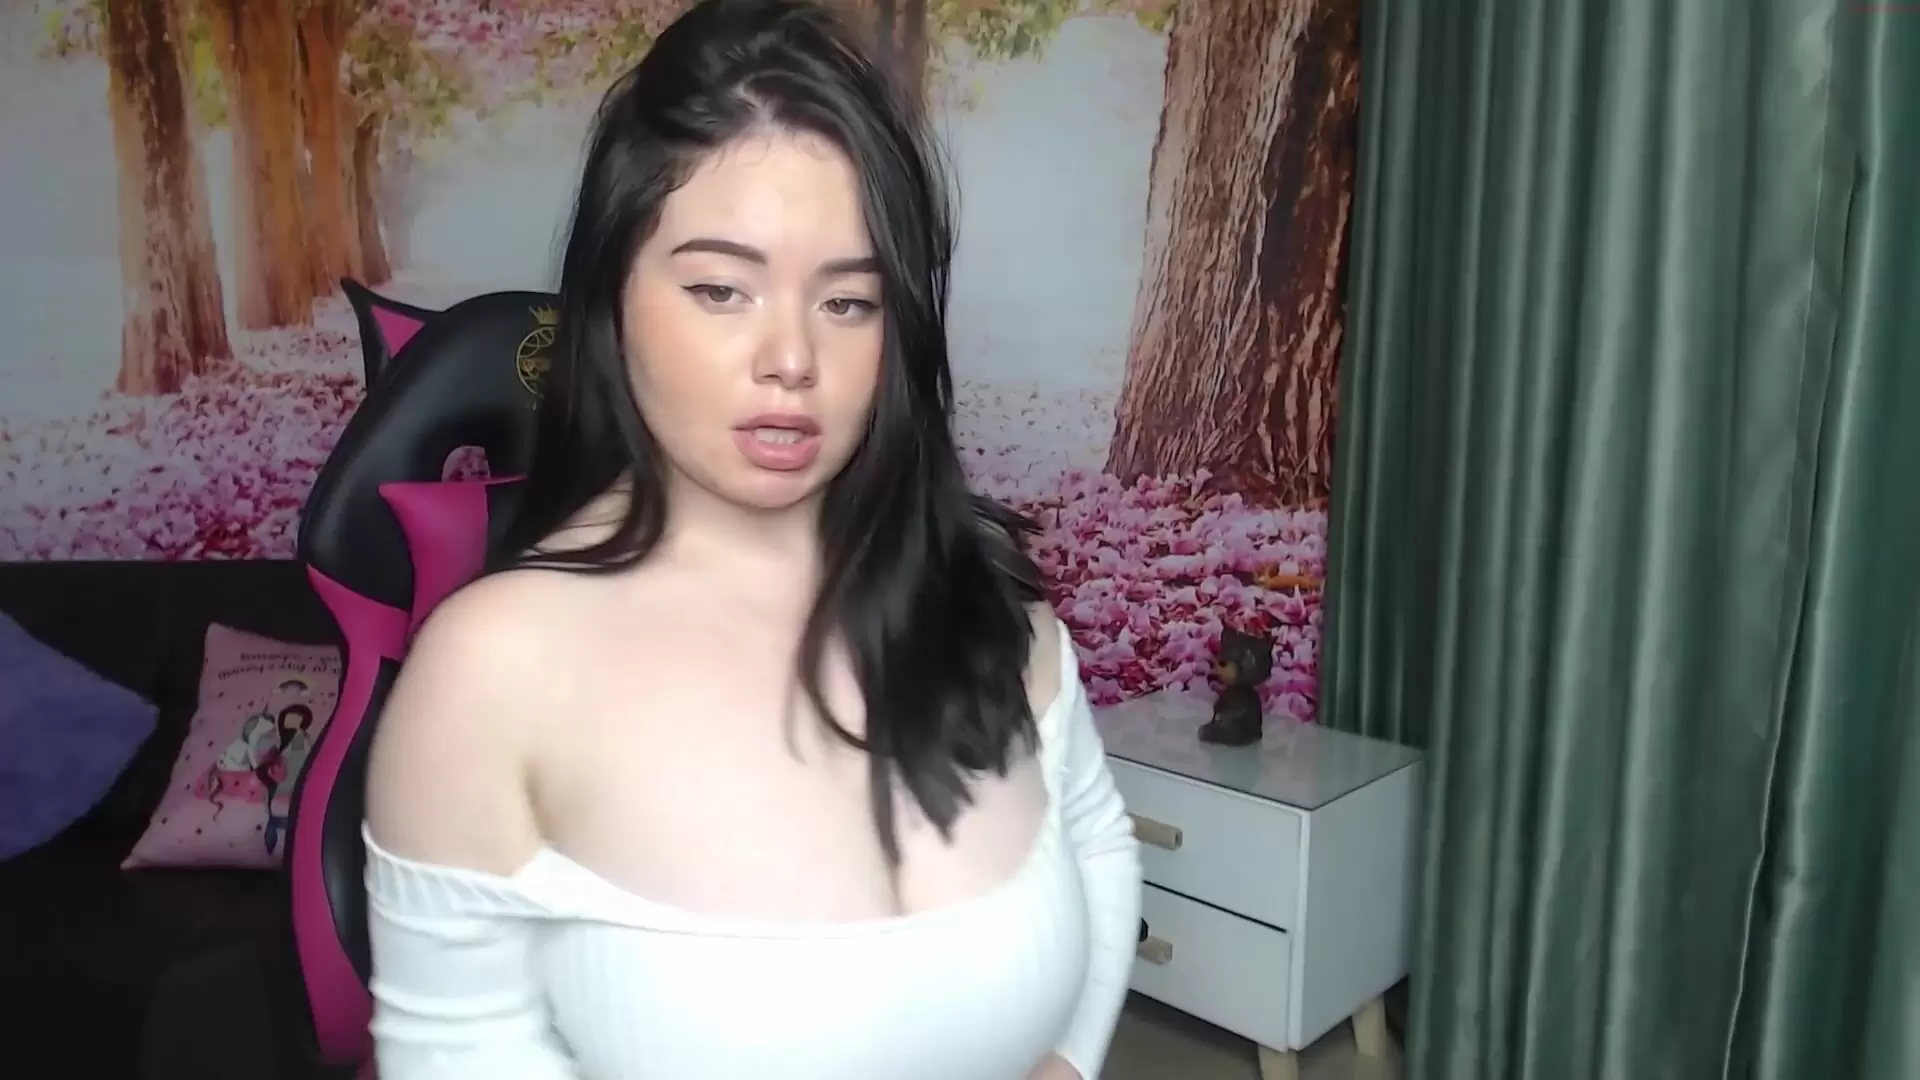 Webcam Girl Striptease